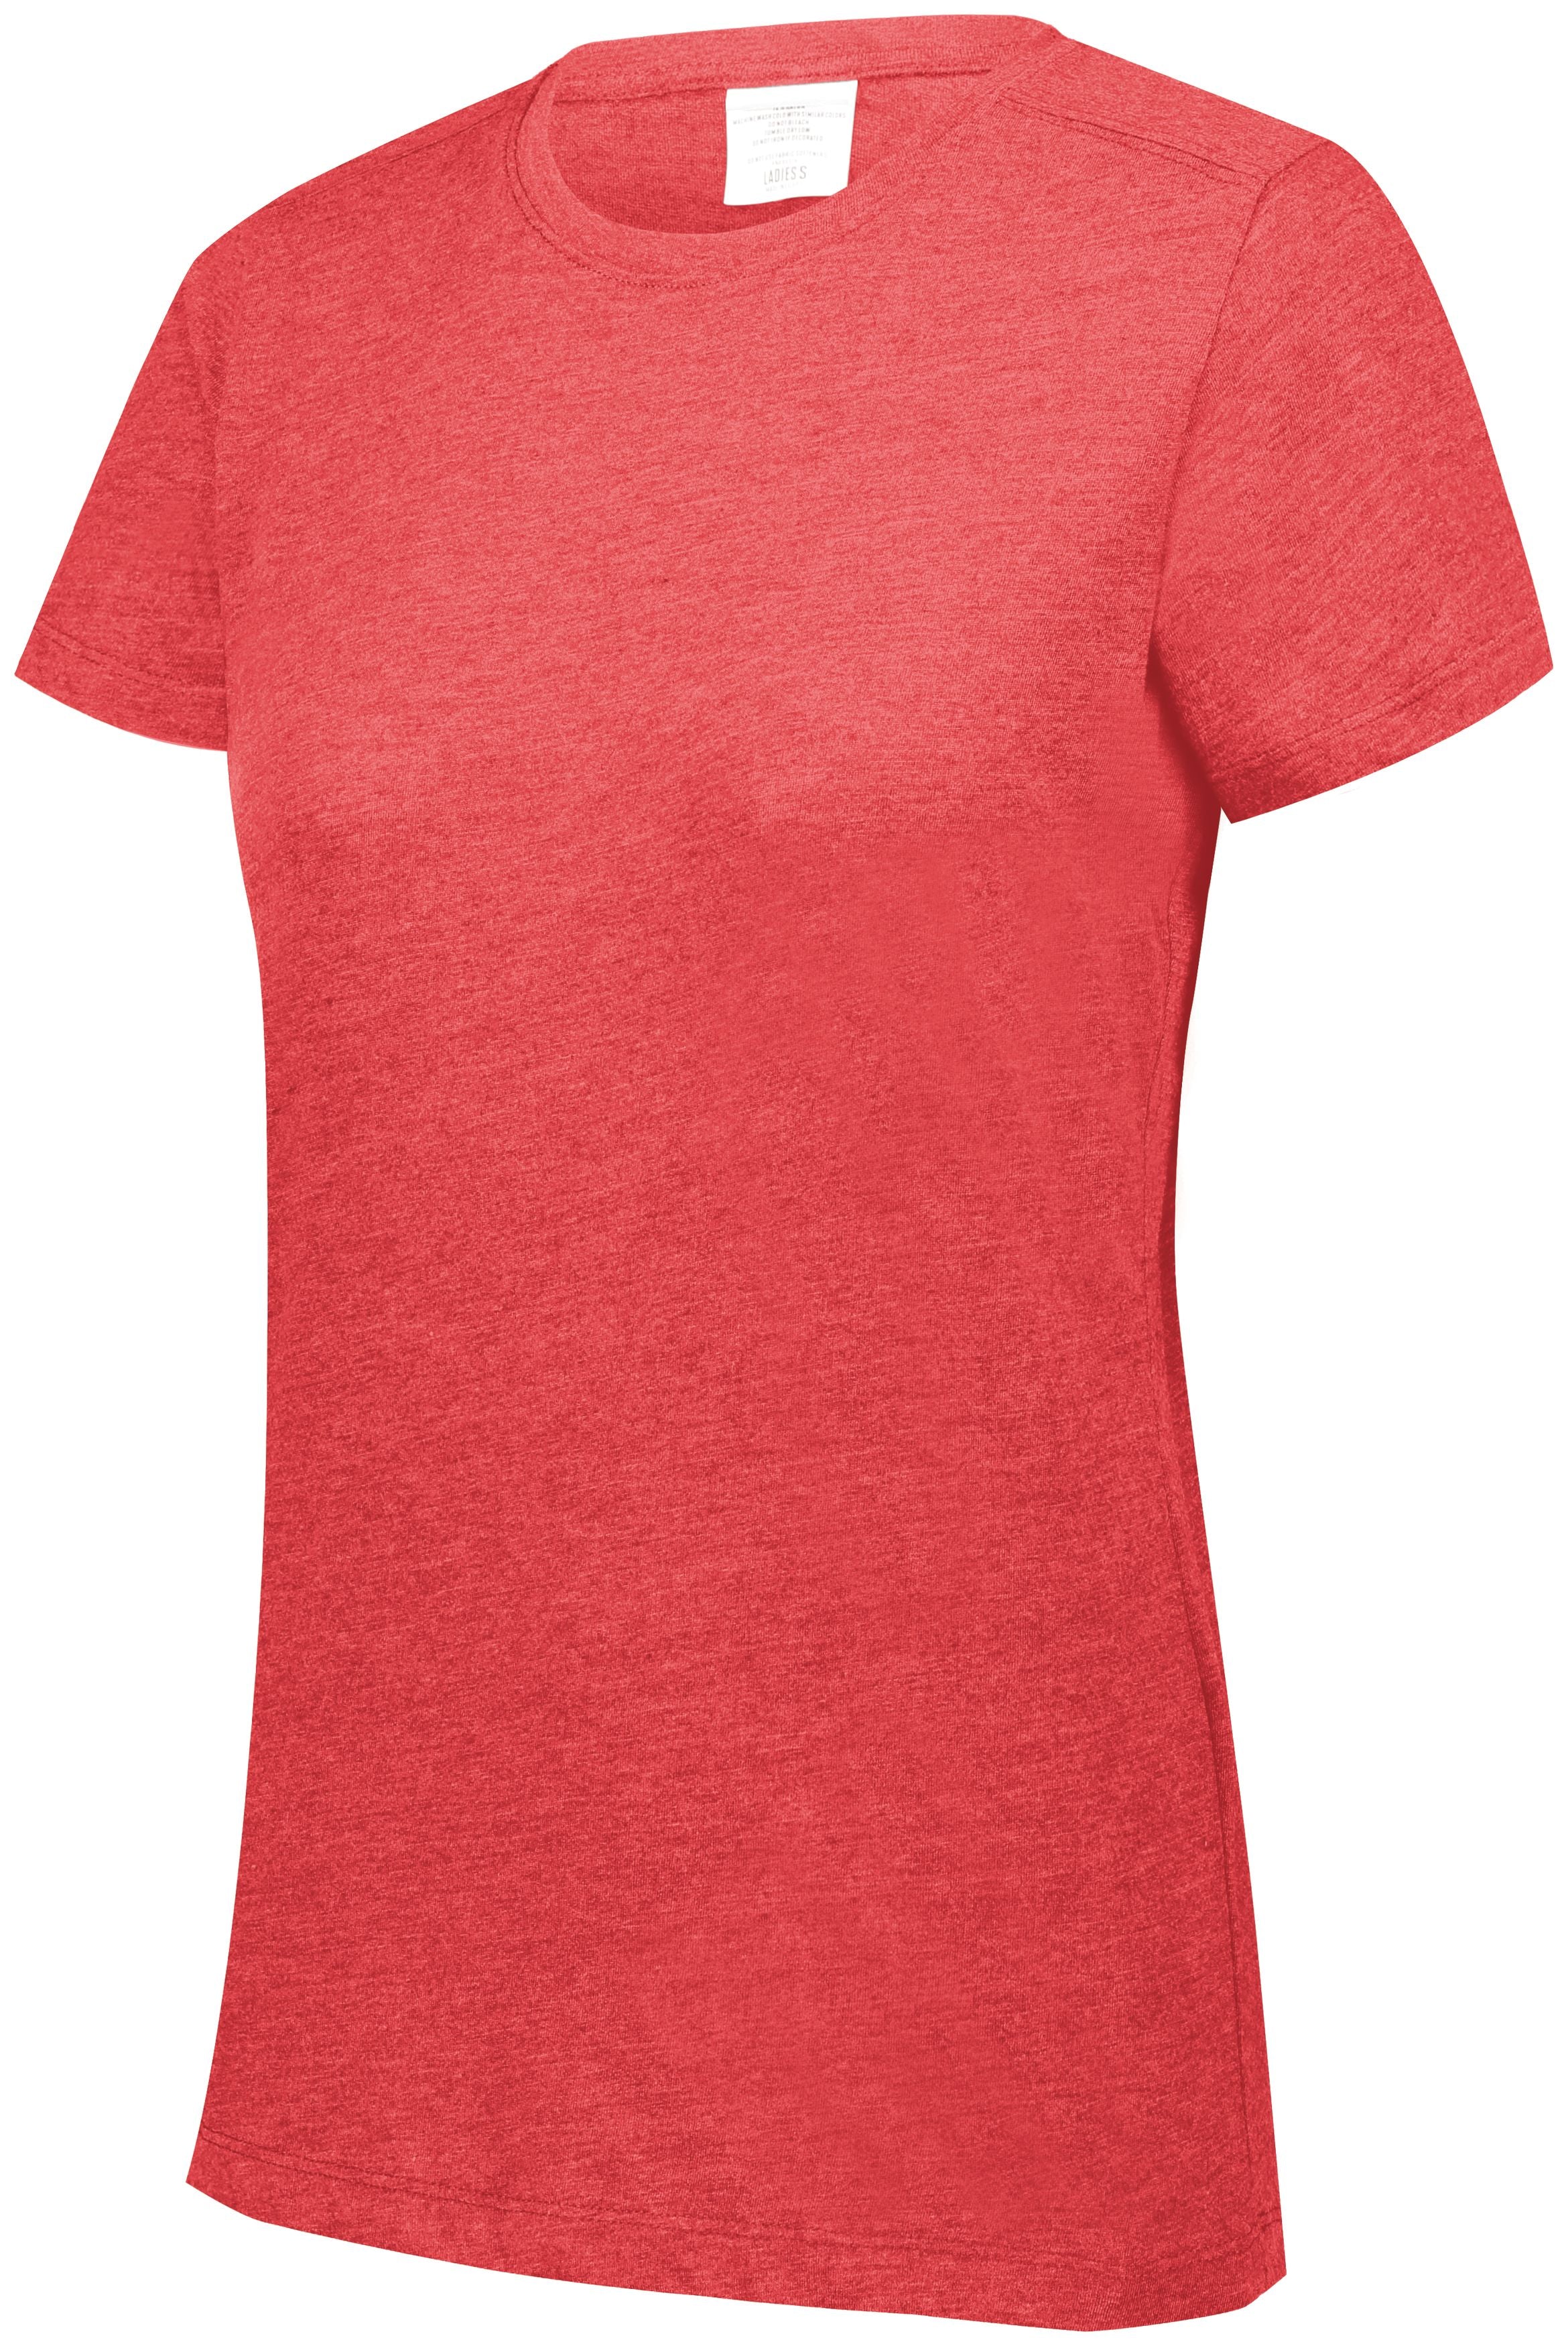 Augusta Sportswear Ladies Tri-Blend T-Shirt in Red Heather  -Part of the Ladies, Ladies-Tee-Shirt, T-Shirts, Augusta-Products, Shirts product lines at KanaleyCreations.com